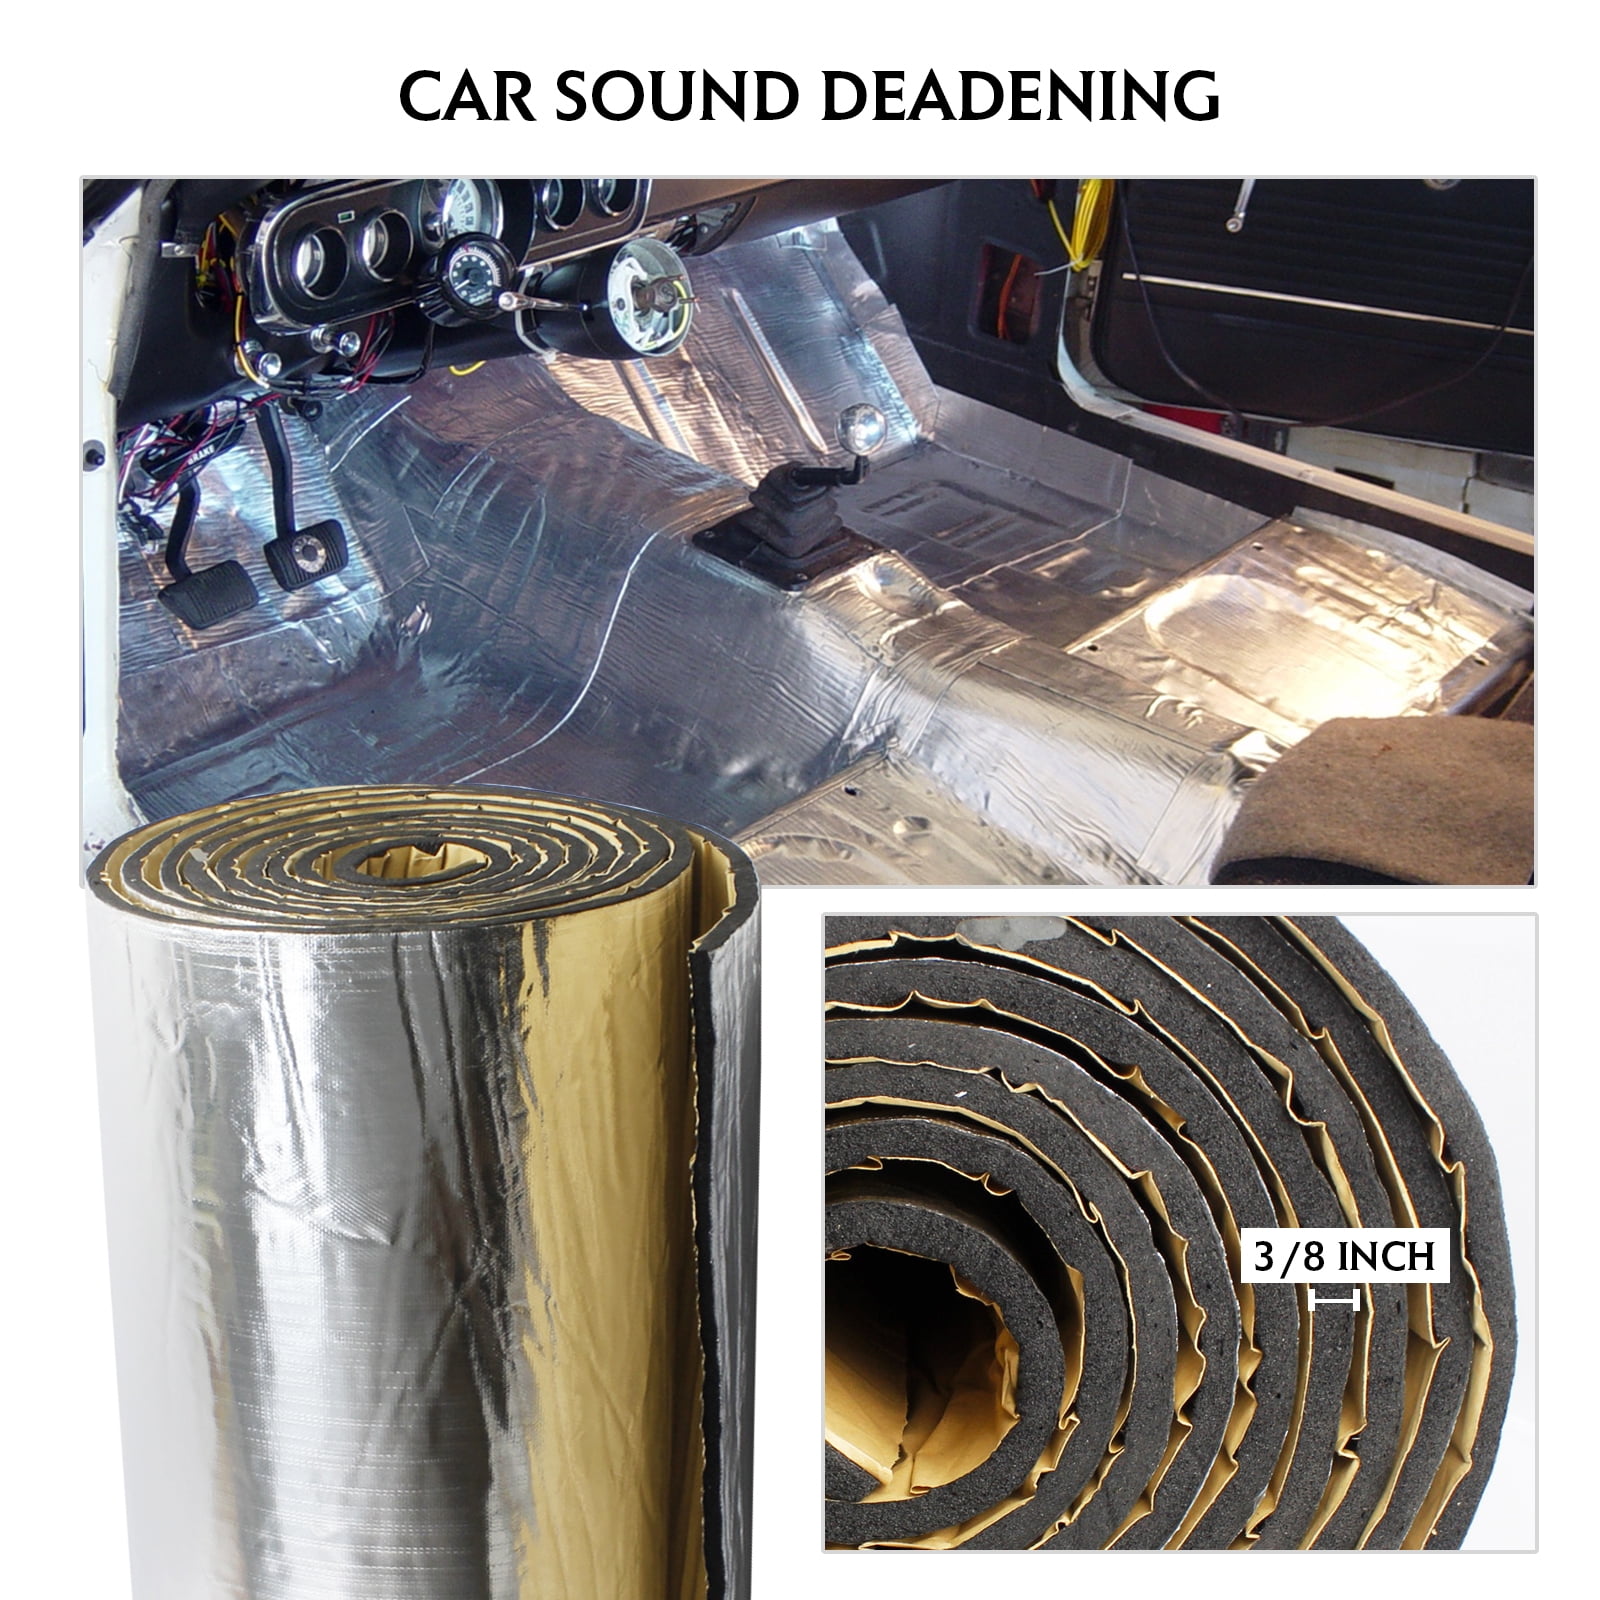 GTMAT License Plate Kit Automotive Vibration Sound Deadener 110mil Supreme  - Sound Dampening Installation Kit Includes: 2 Sheets (4 x 10),  Instruction Sheet, GT MAT Decals - Buy Online - 17130196